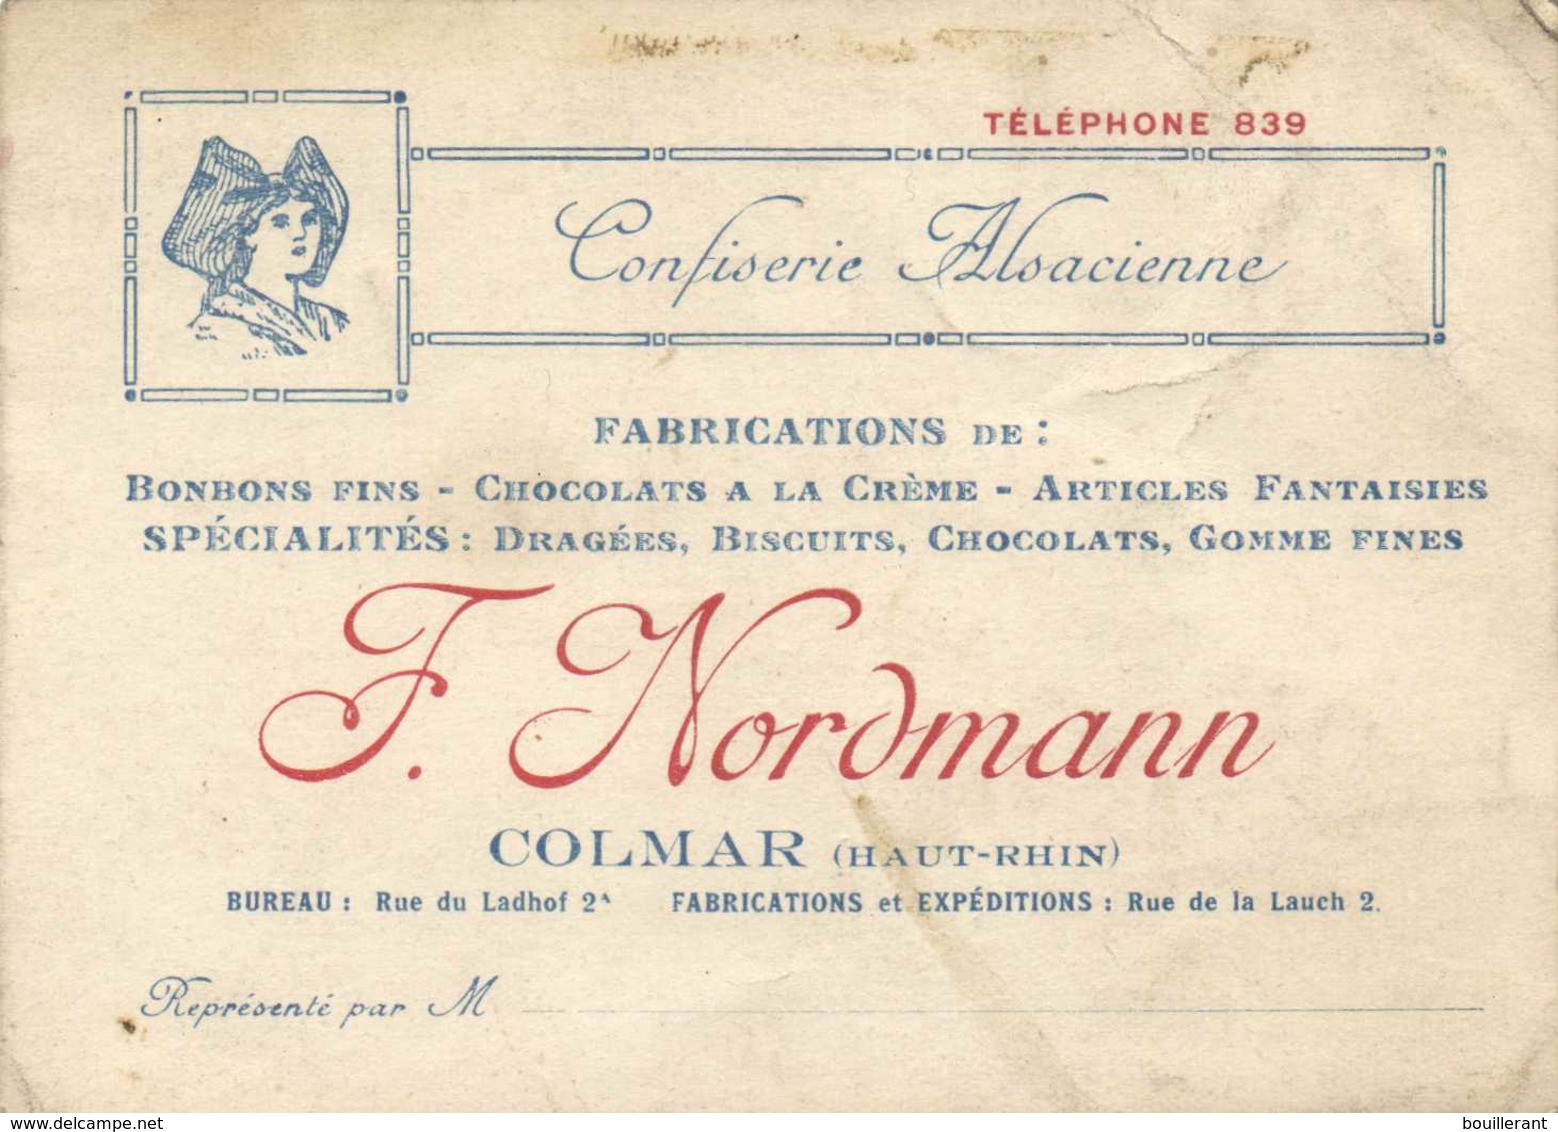 CONFISERIE ALSACIENNE - F. NORDMANN - COLMAR - Visiting Cards